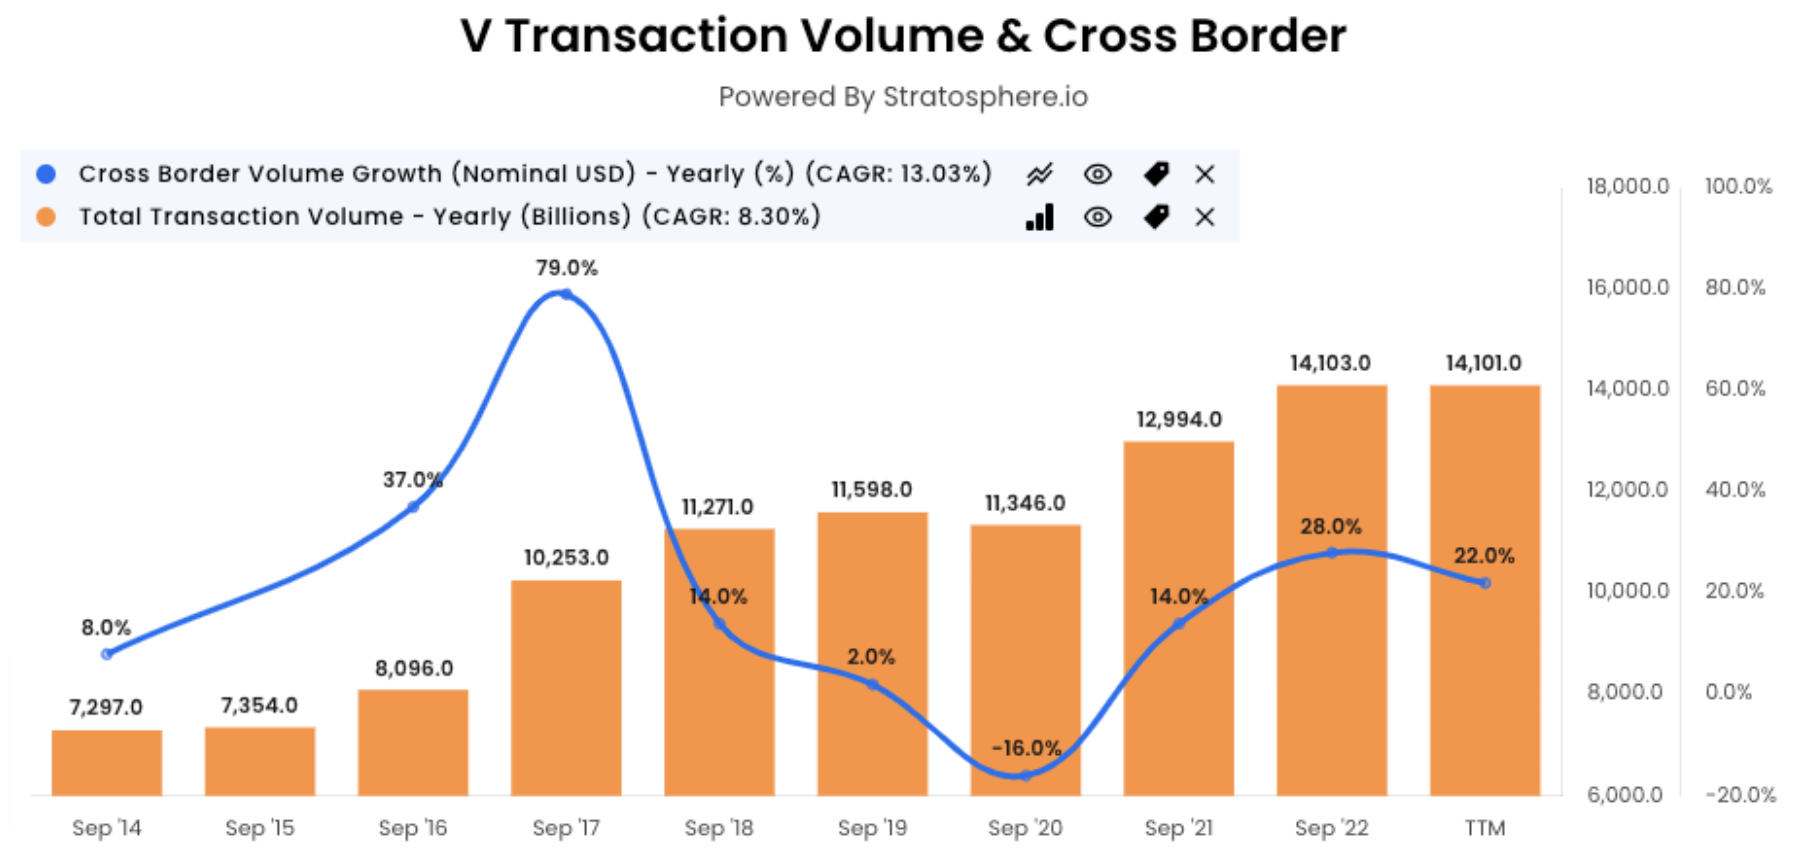 Visa Inc. cross border volume growth and total transaction volume graph